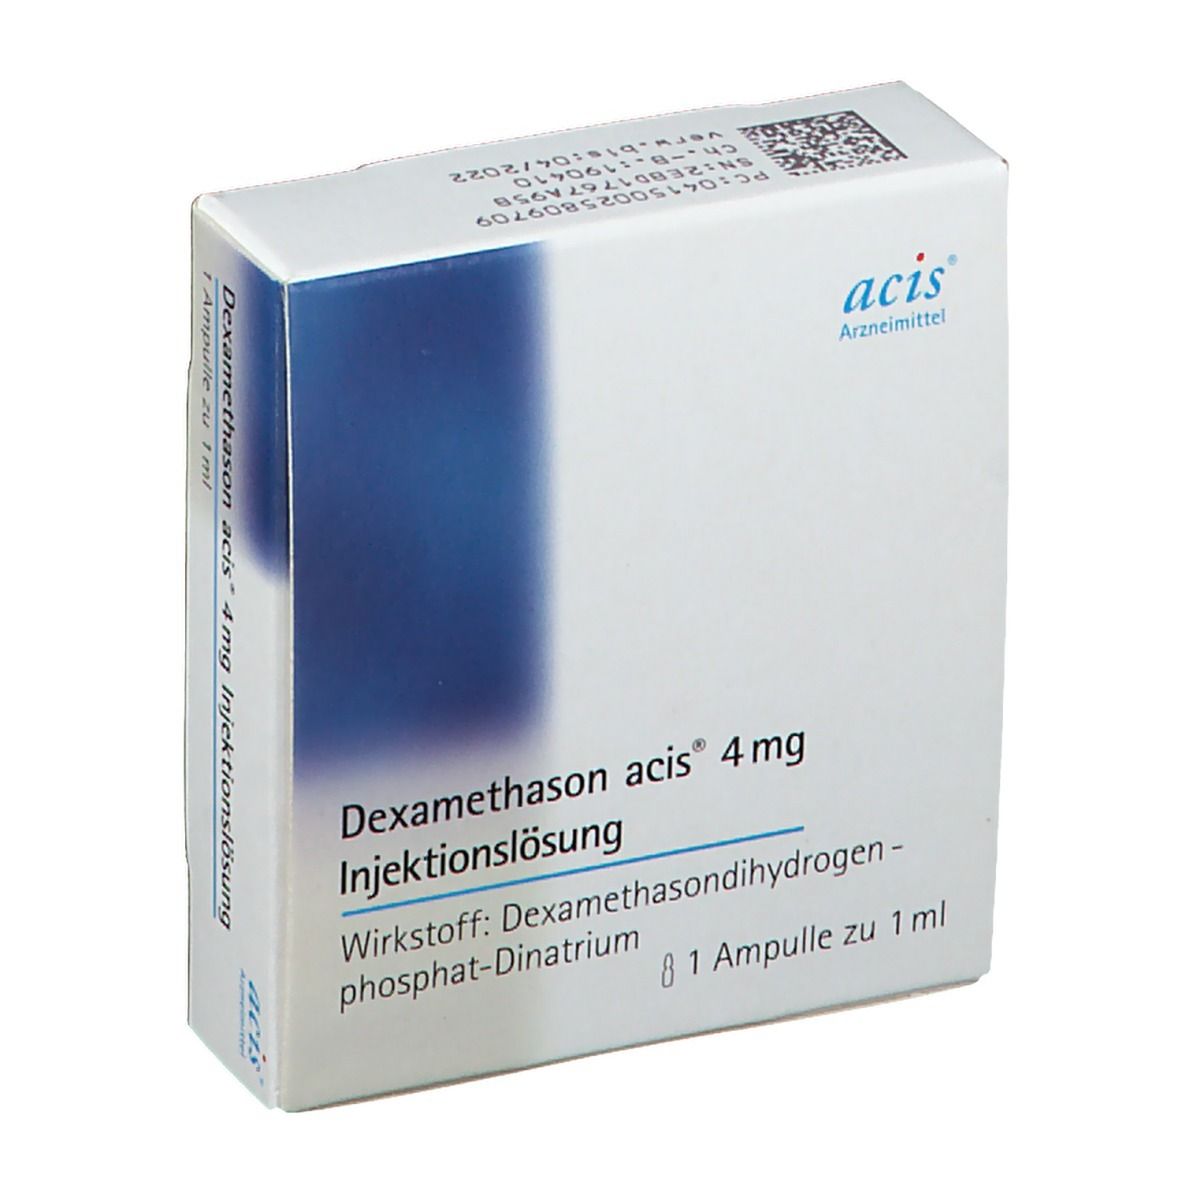 Dexamethason acis® 4 mg